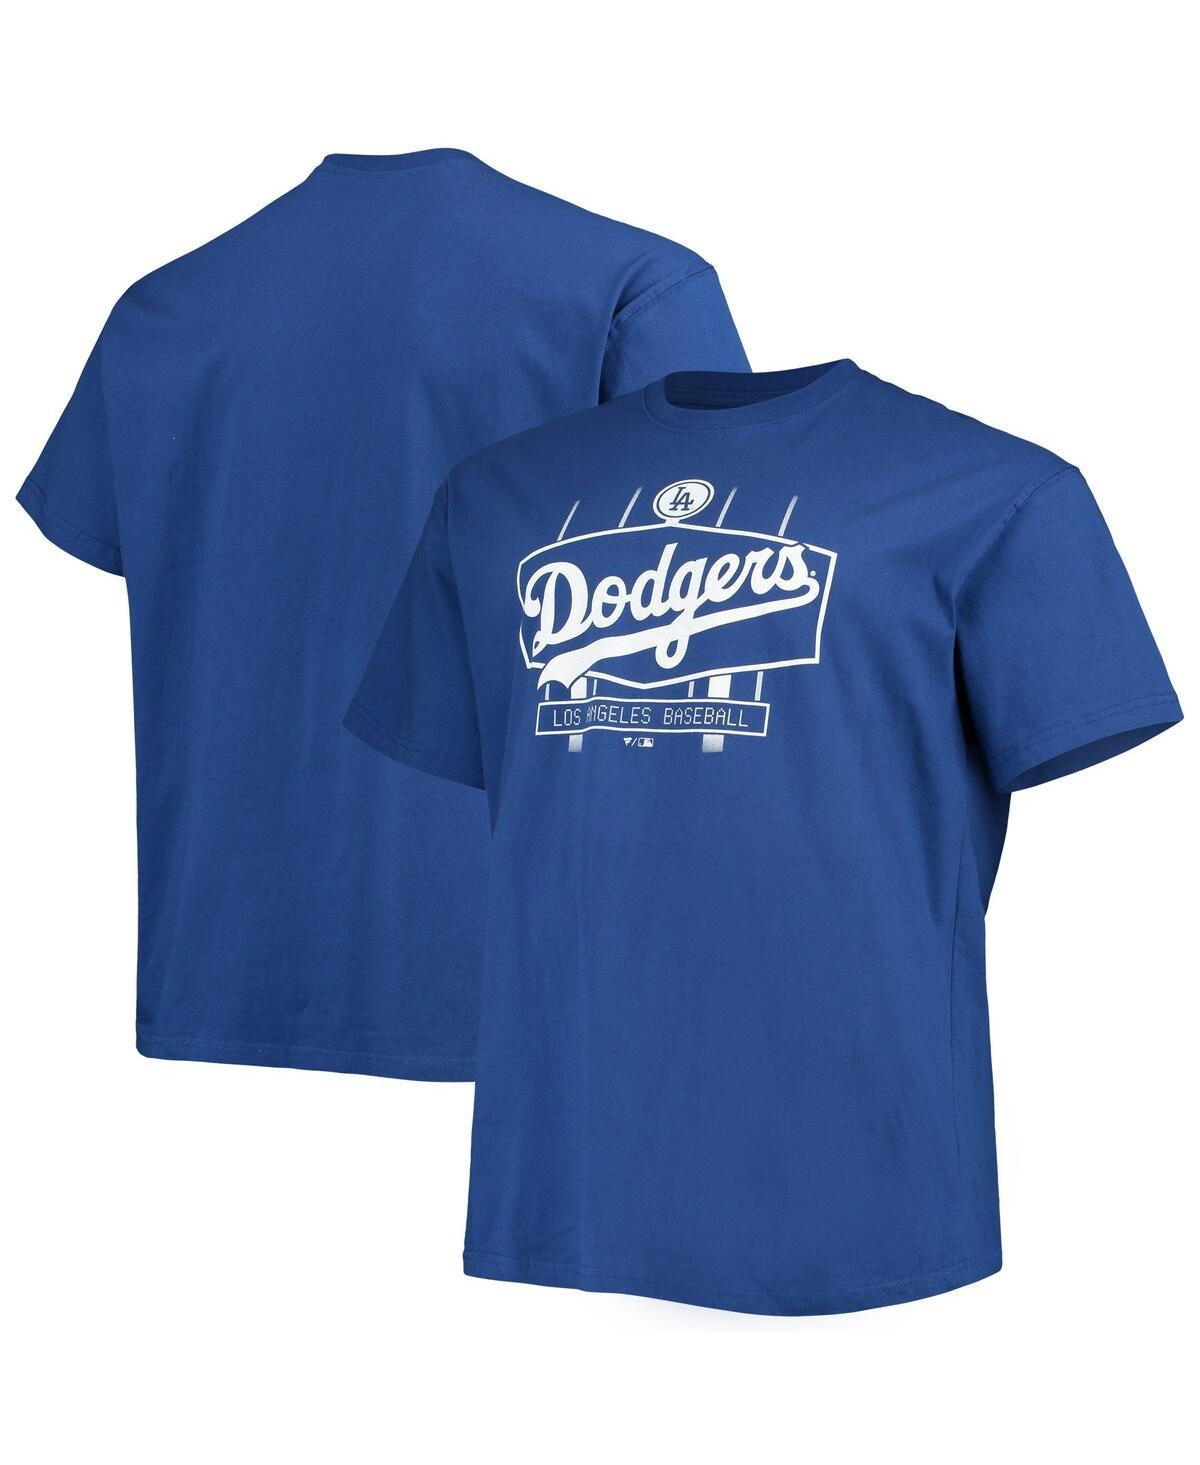 Top Los Angeles Angels Majestic Cotton T Shirt Mens Baseball Tee